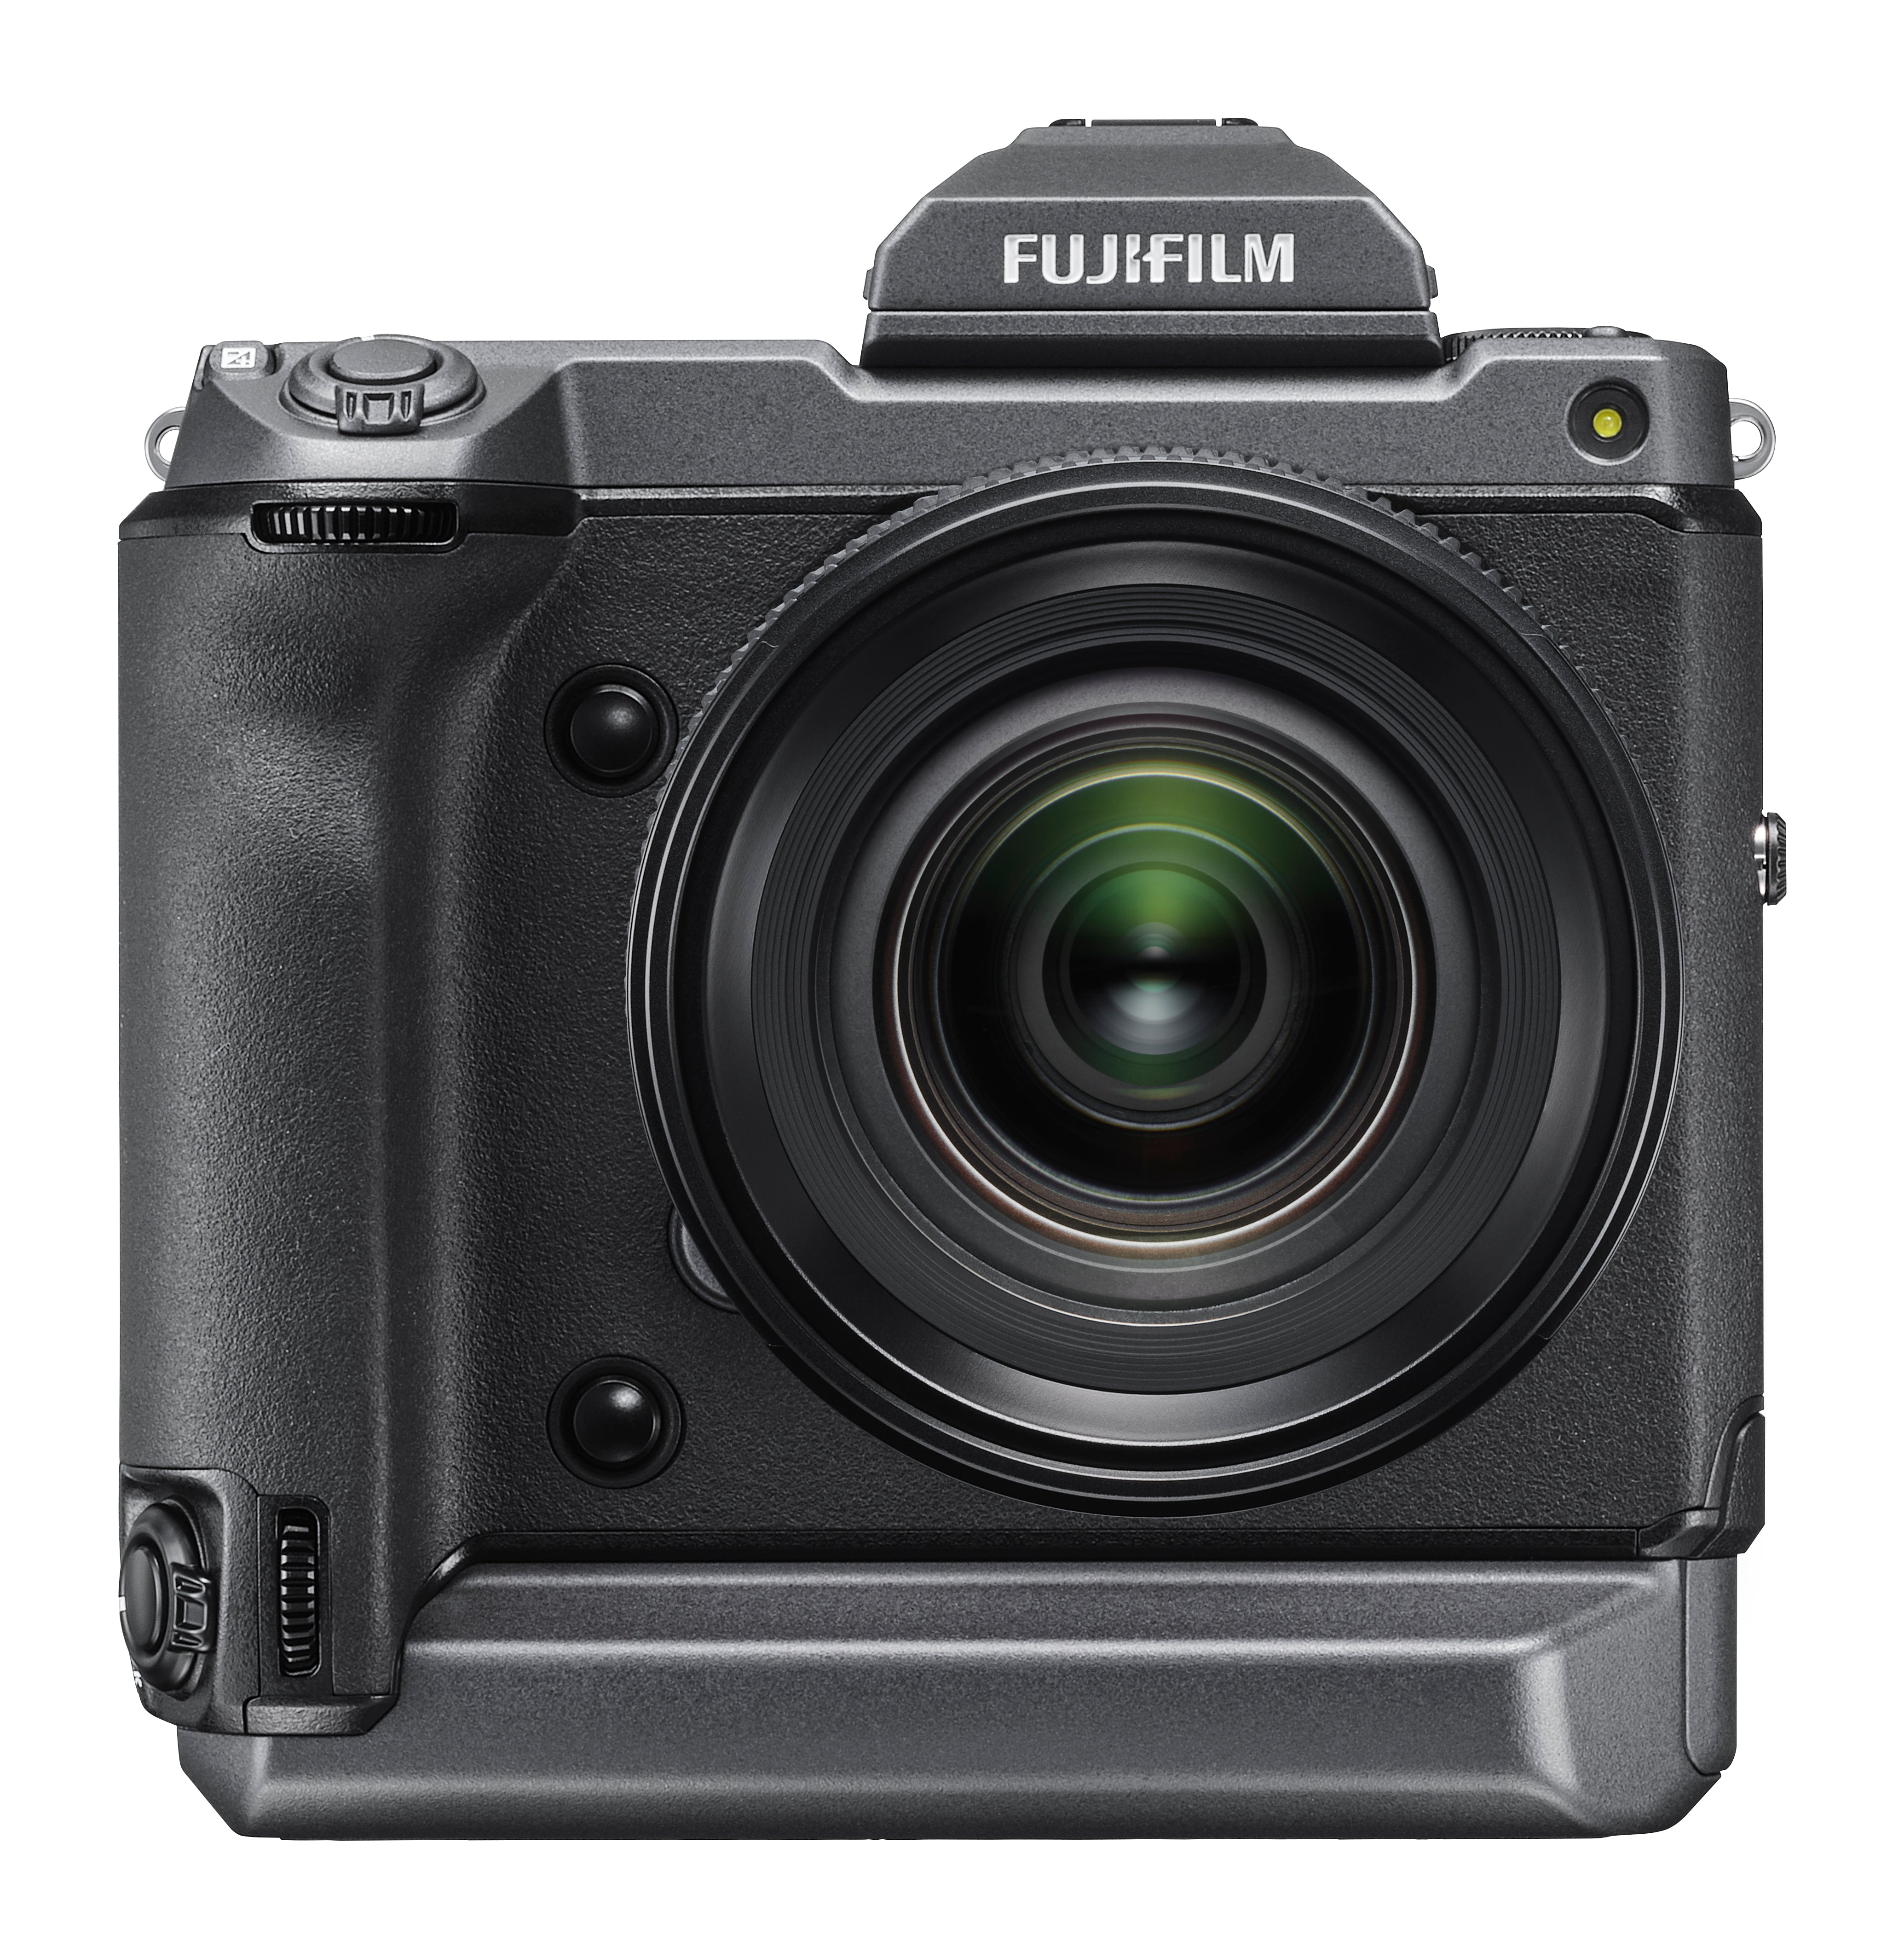 Fujifilm Fujinon GF 45-100mm f/4 R LM OIS WR Lens